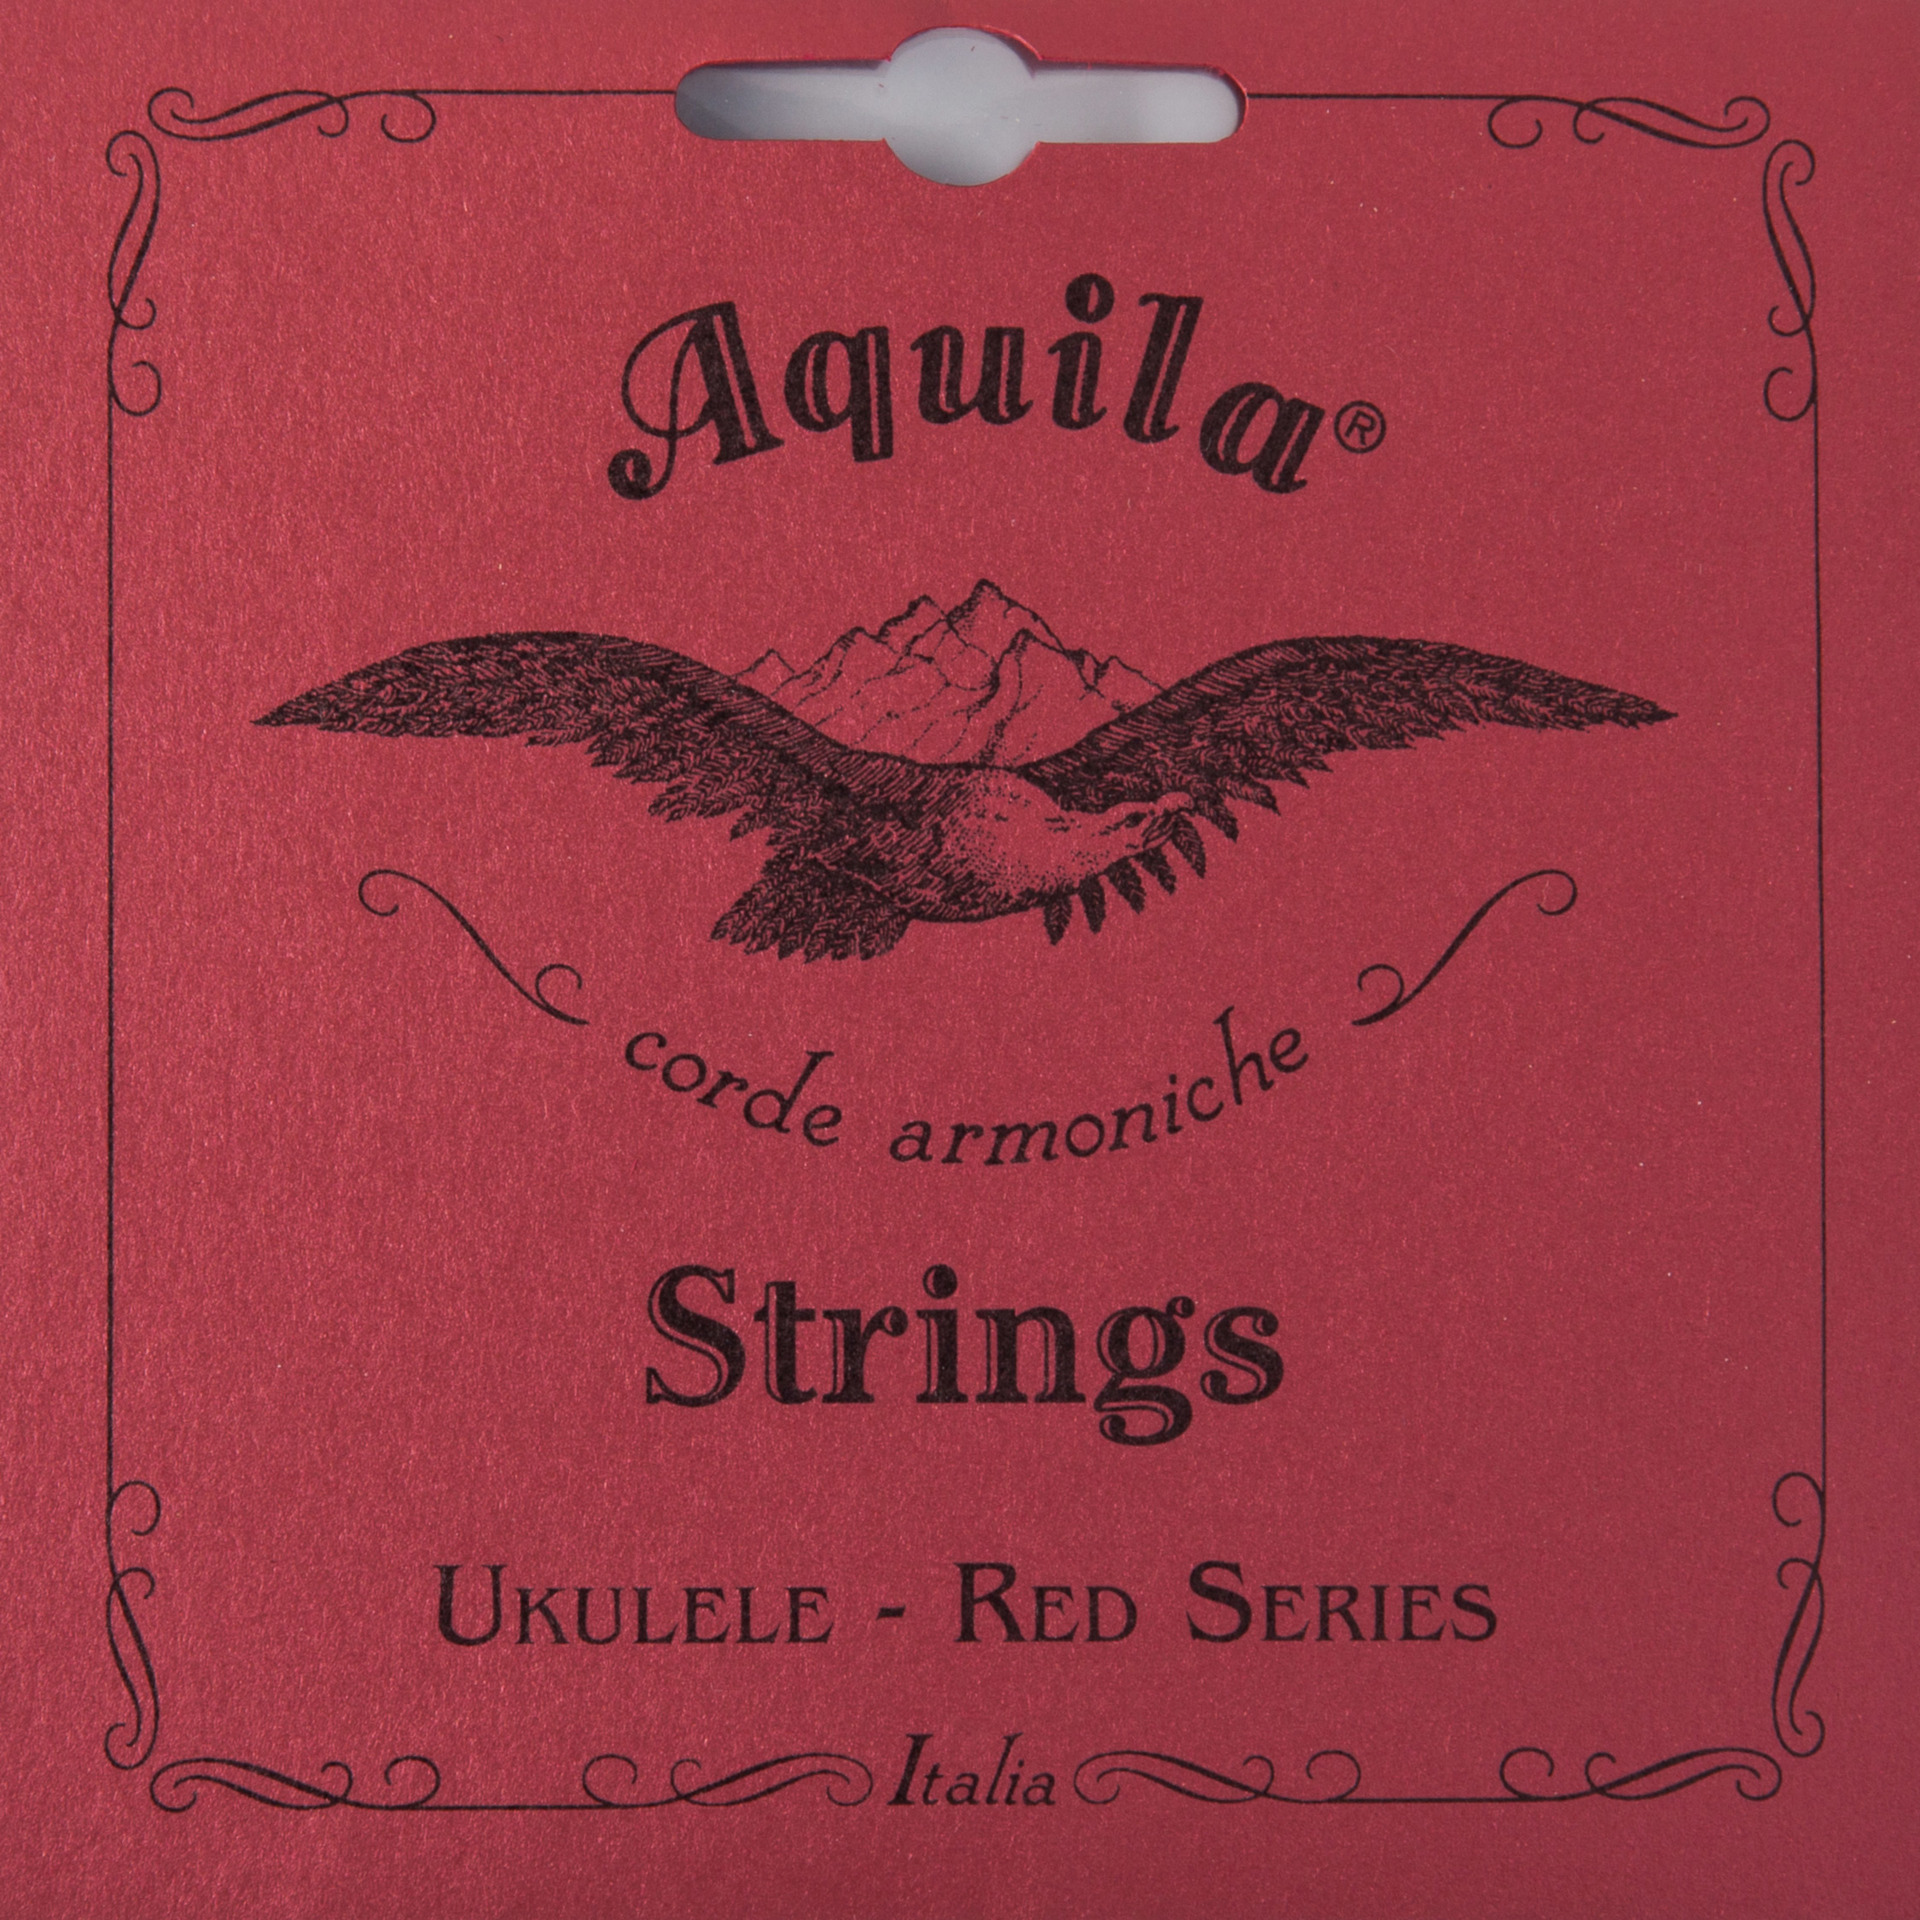 Aquila 134U - Red Series, Ukulele Single String - Soprano, Low-G (4th), Wound